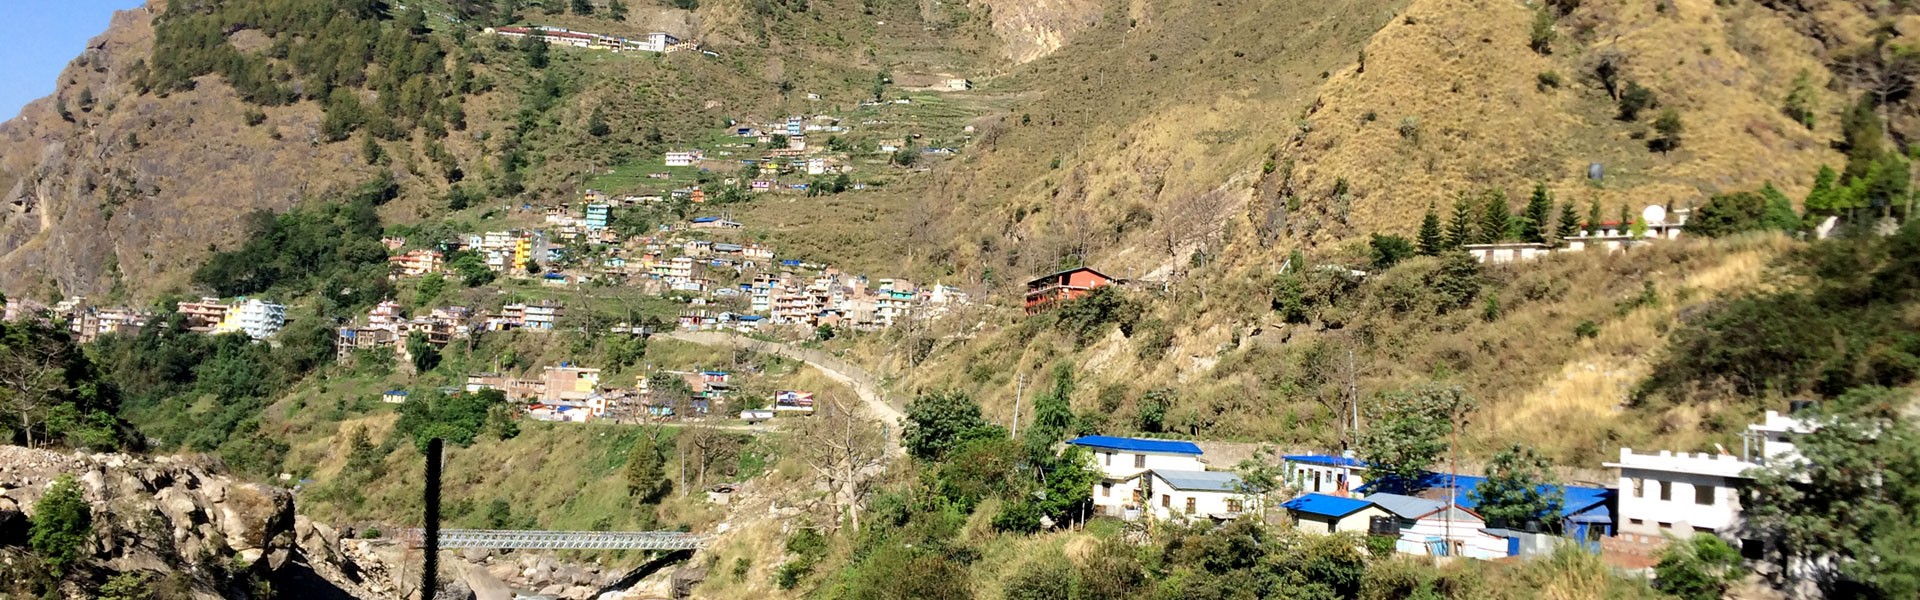 Langtang - Helambu trekking